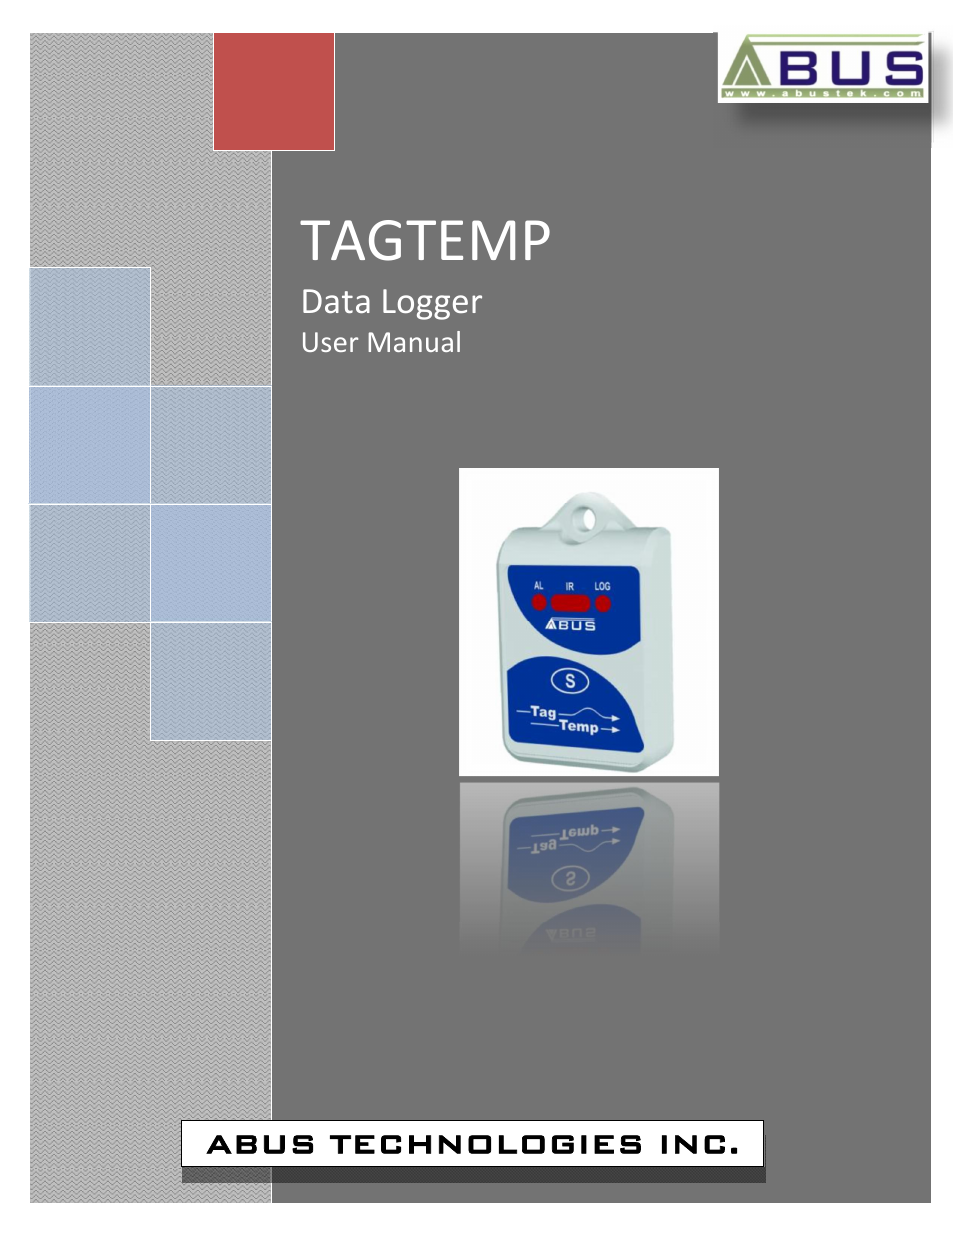 TAGTEMP Data Logger